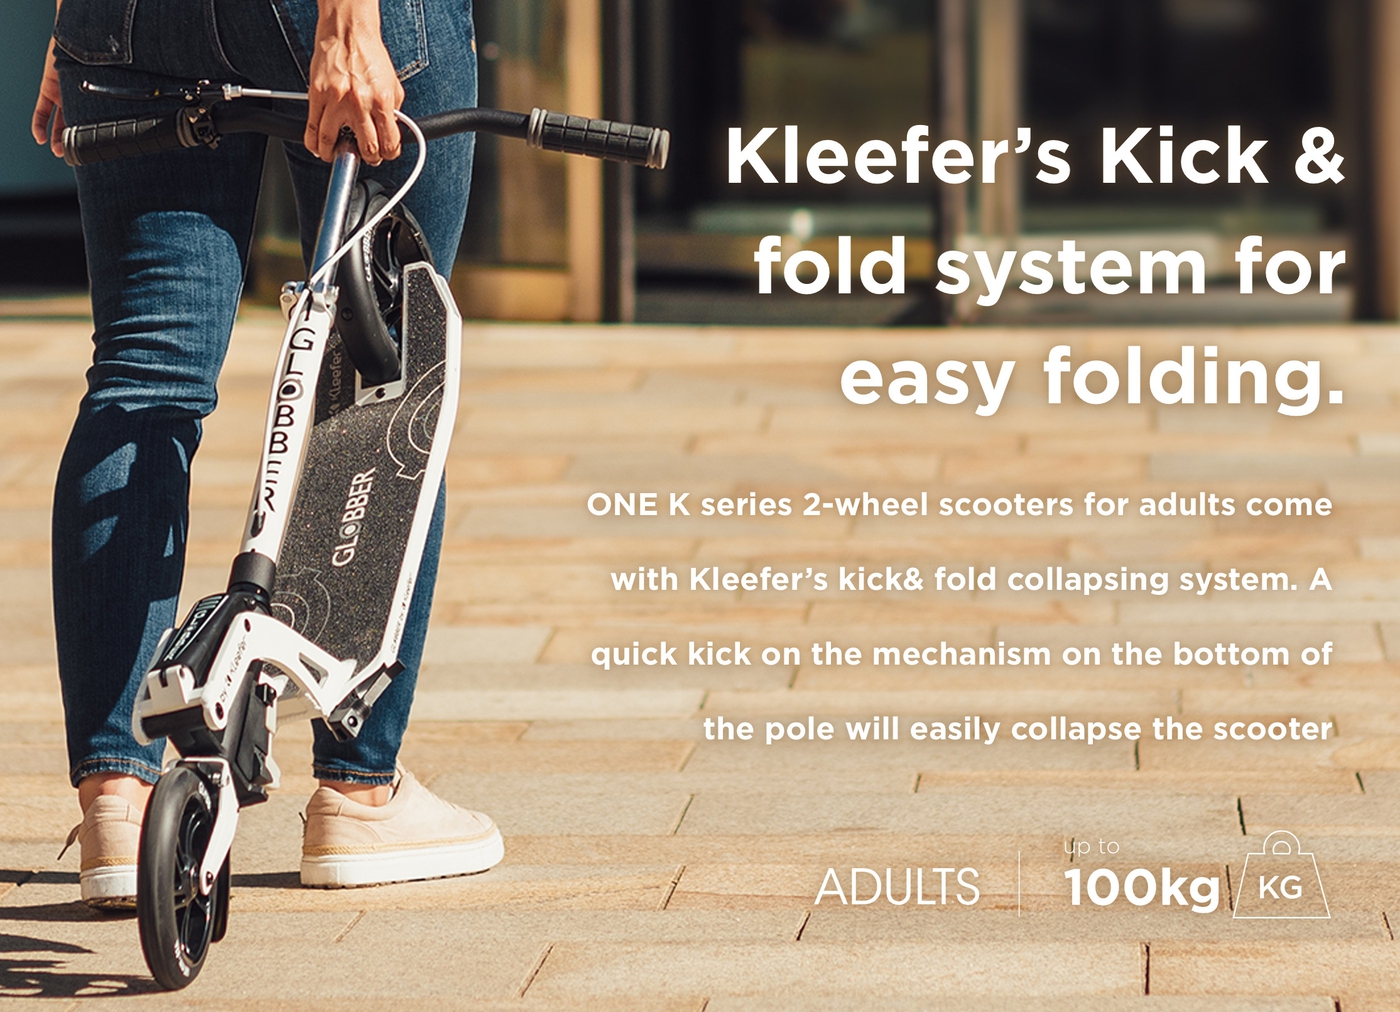 Kleefer’s kick & fold system for easy folding.